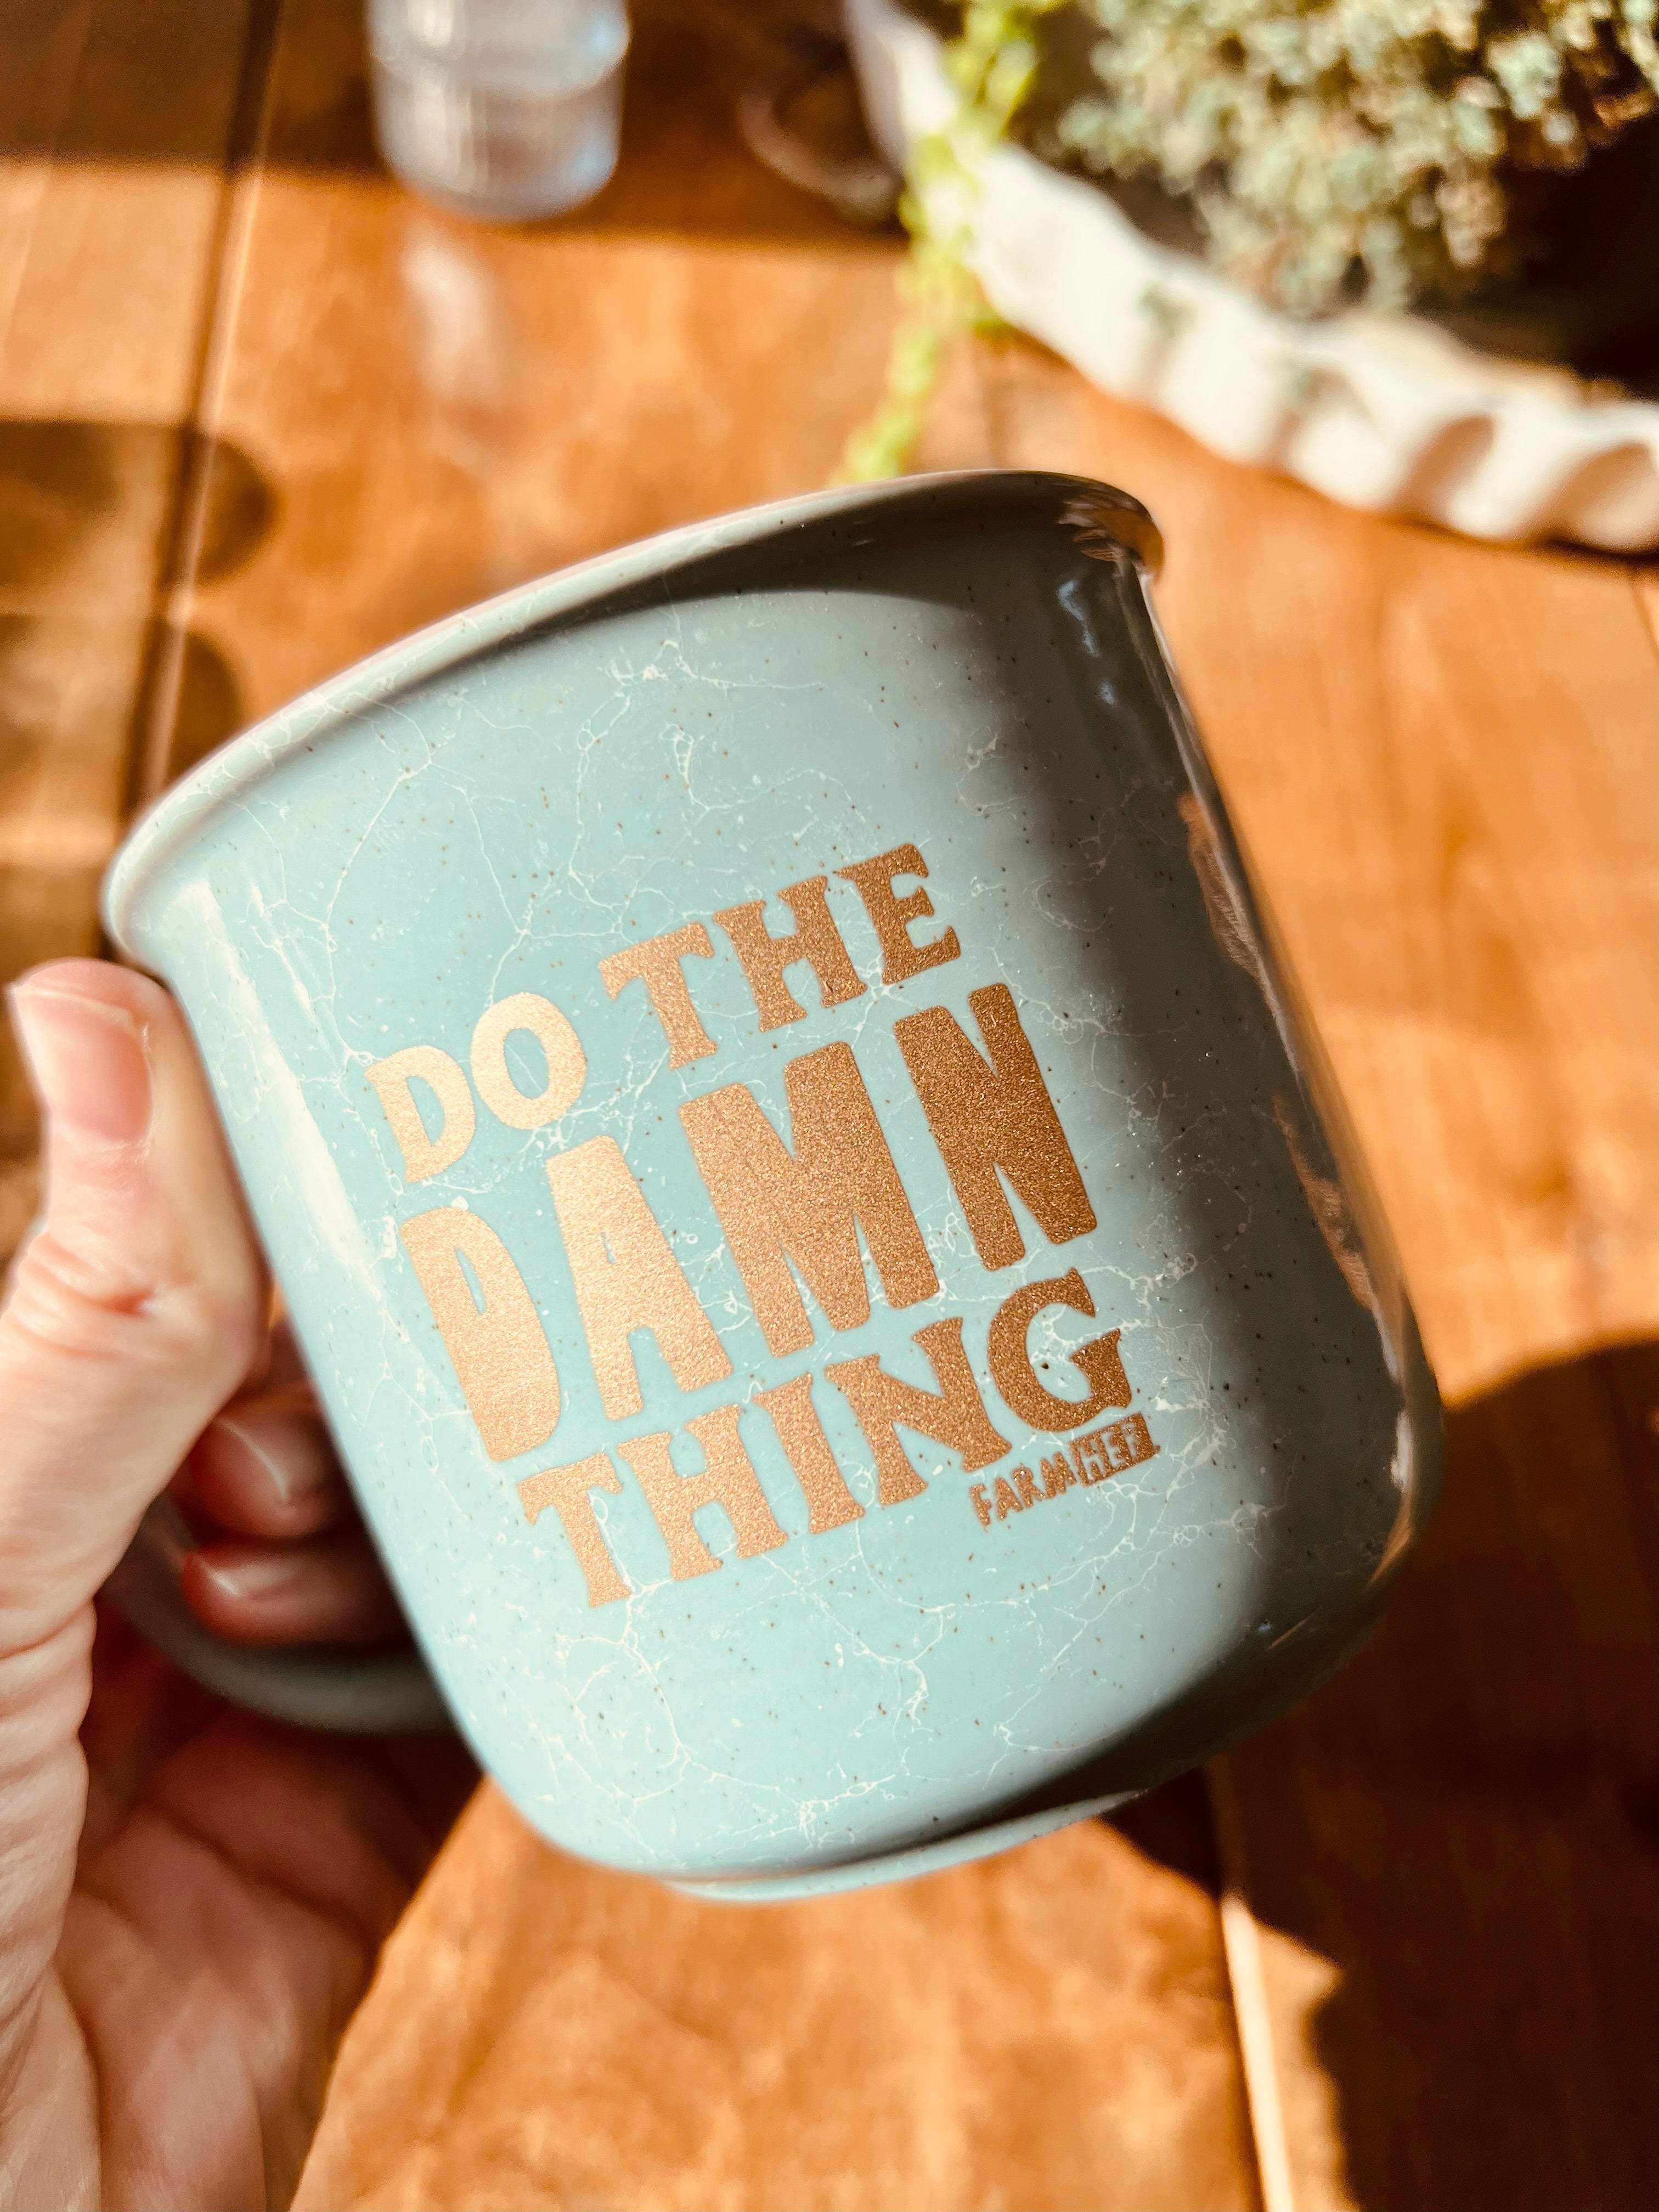 Do the Damn Thing Coffee Mug